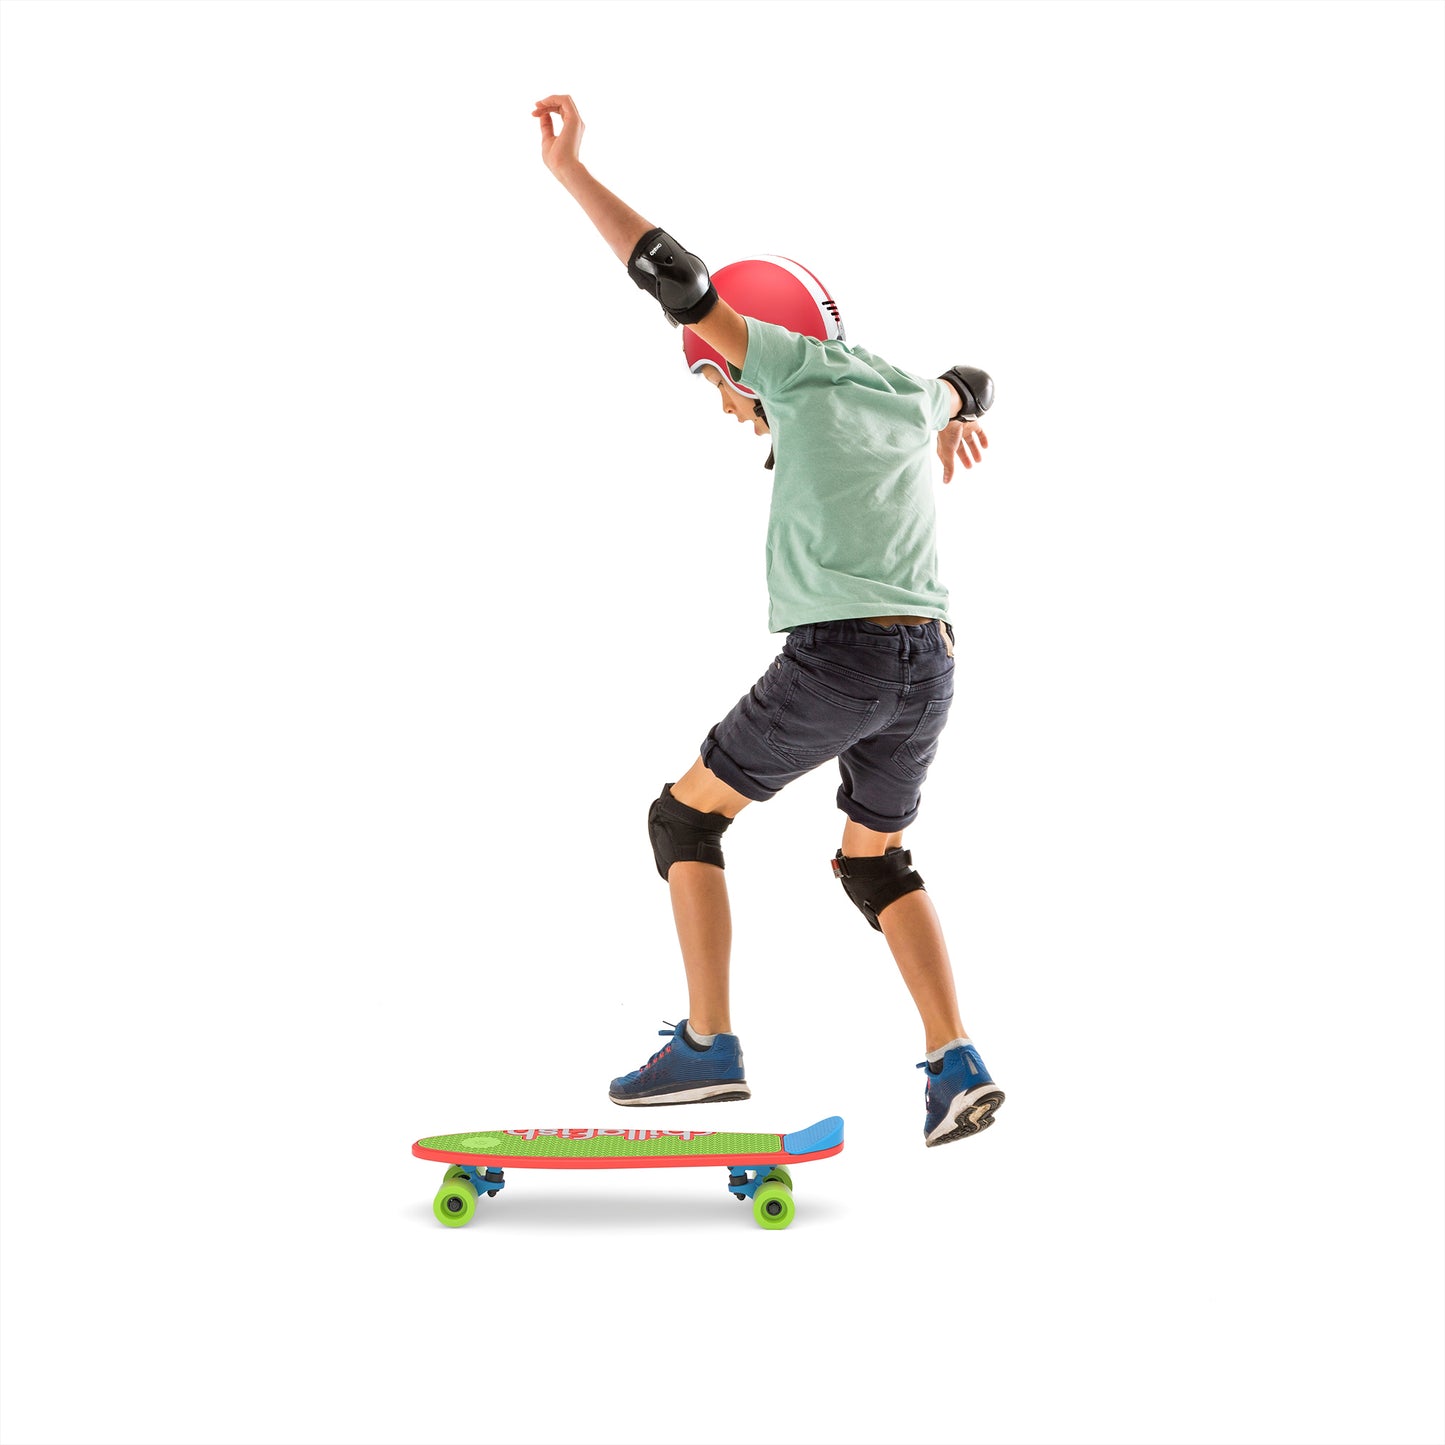 Skatie - customize your first skateboard